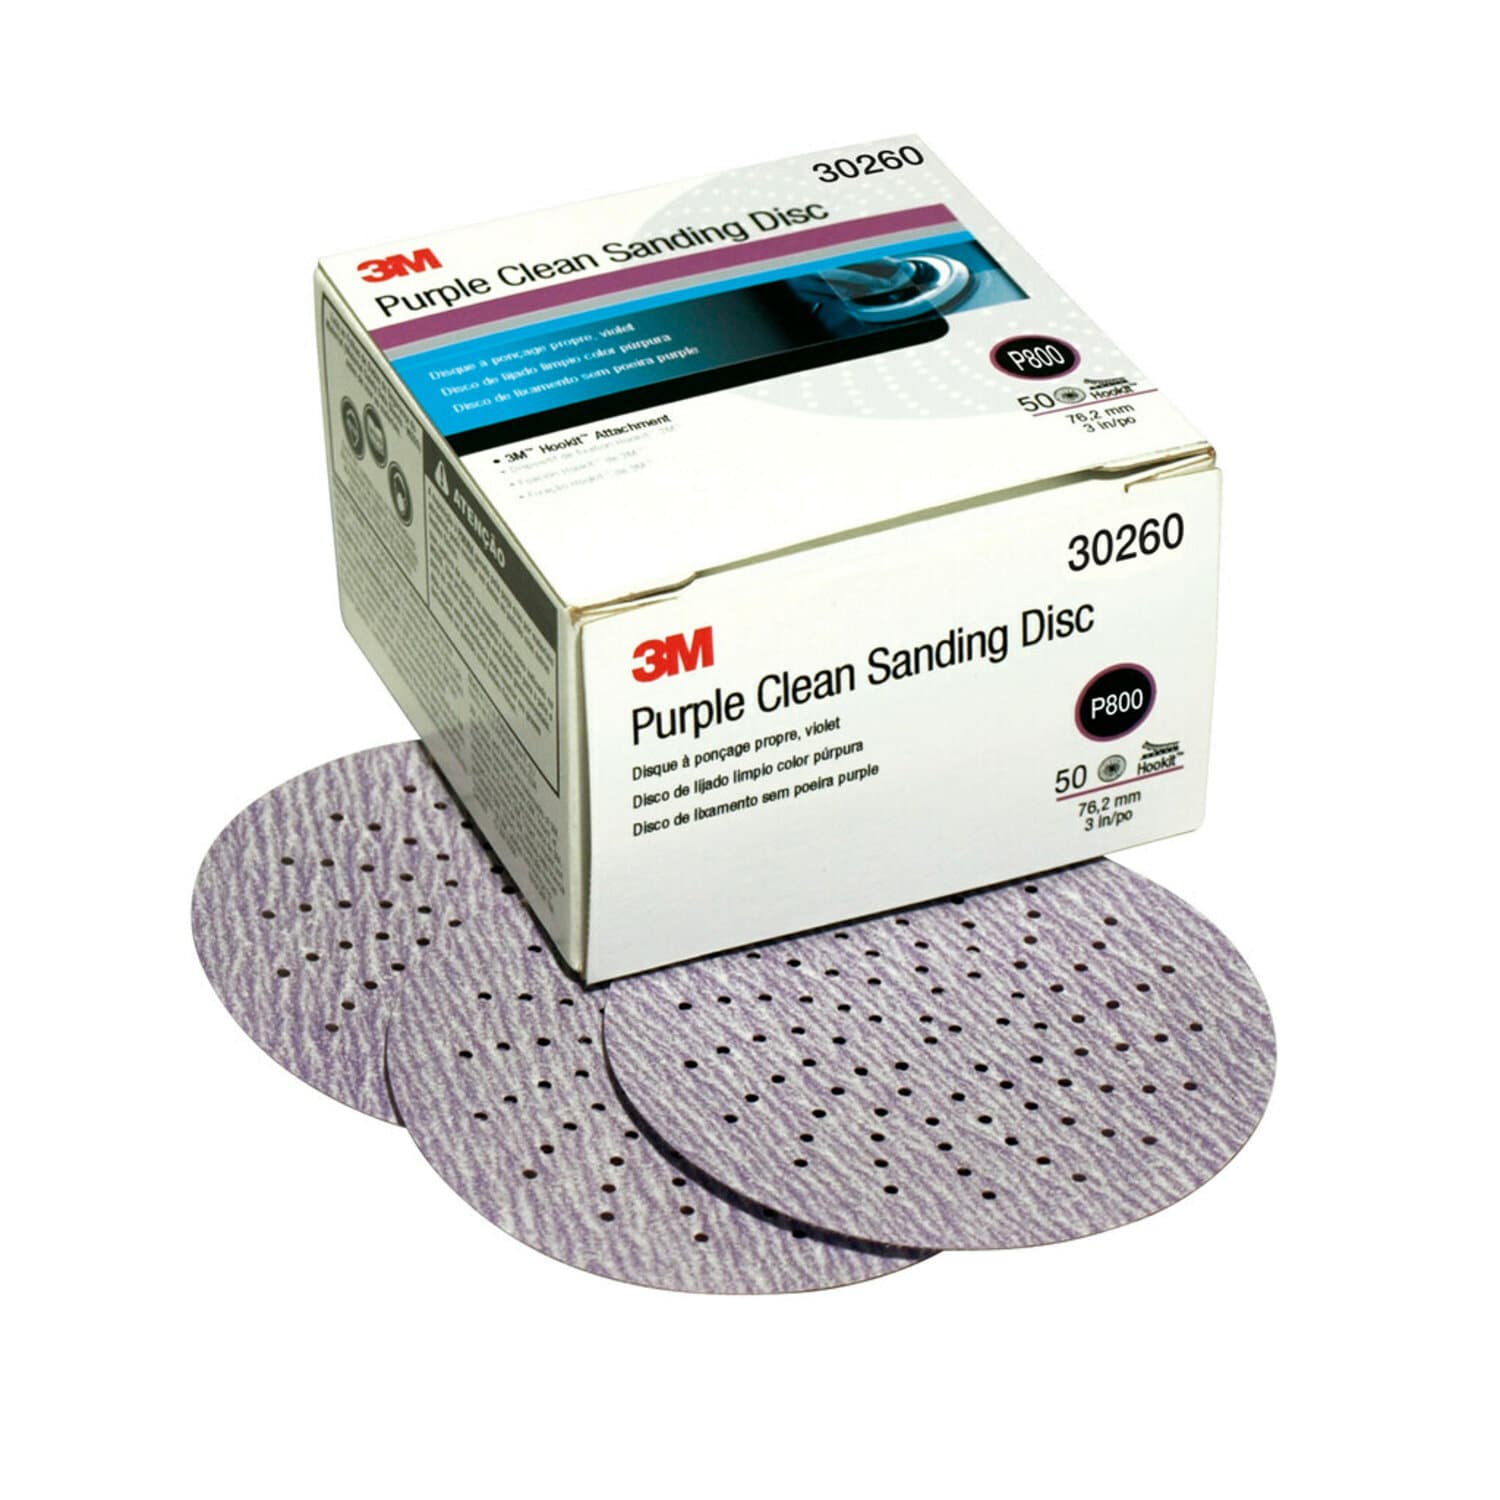 7000000504 - 3M Hookit Purple Clean Sanding Disc 343U, 30260, 3 in, P800, 50 discs
per carton, 4 cartons per case